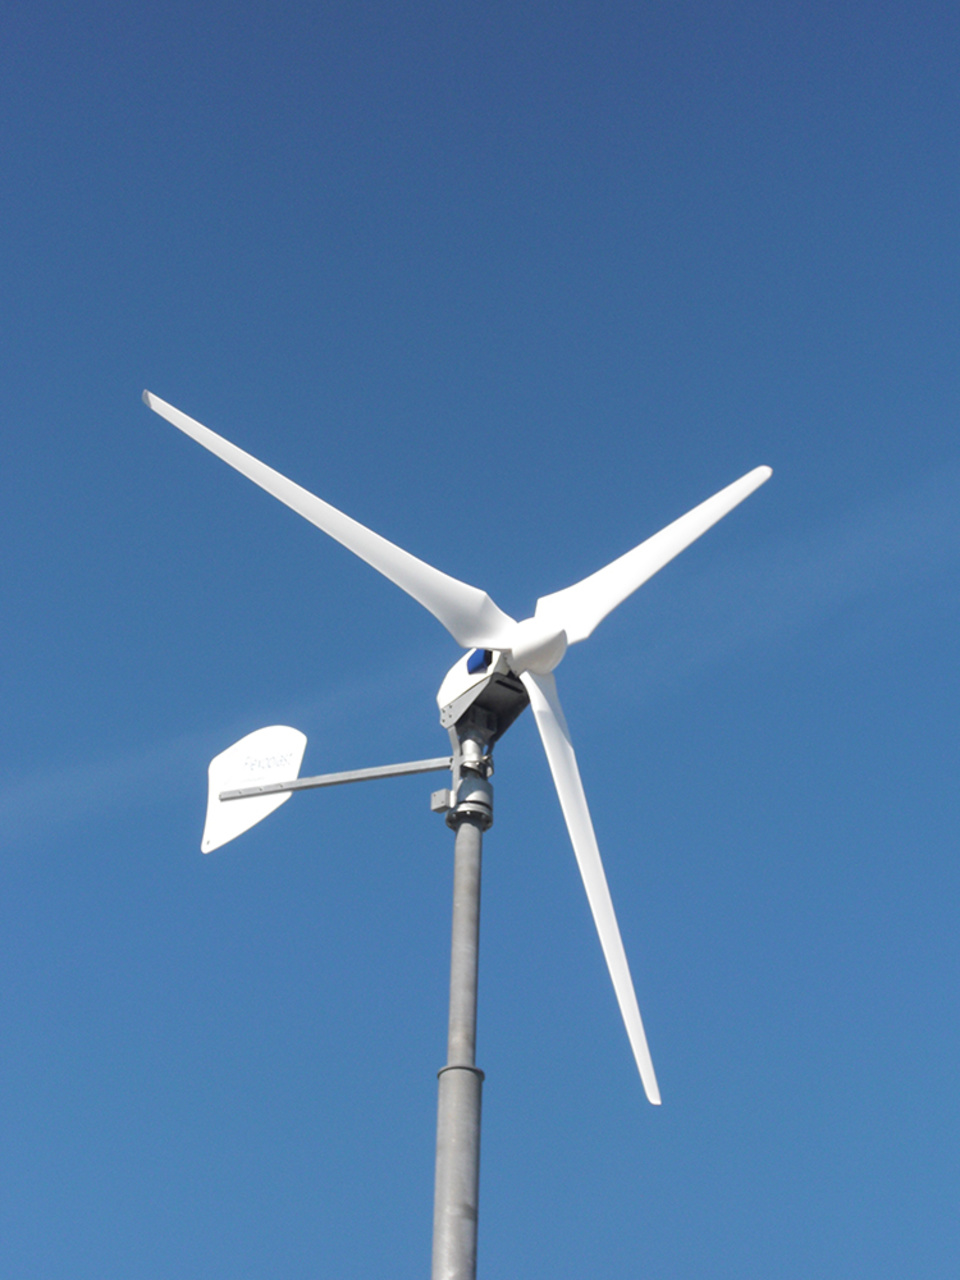 Windkraft2 bei Hans-Dieter & Maik Zoberbier GbR in Luckenwalde